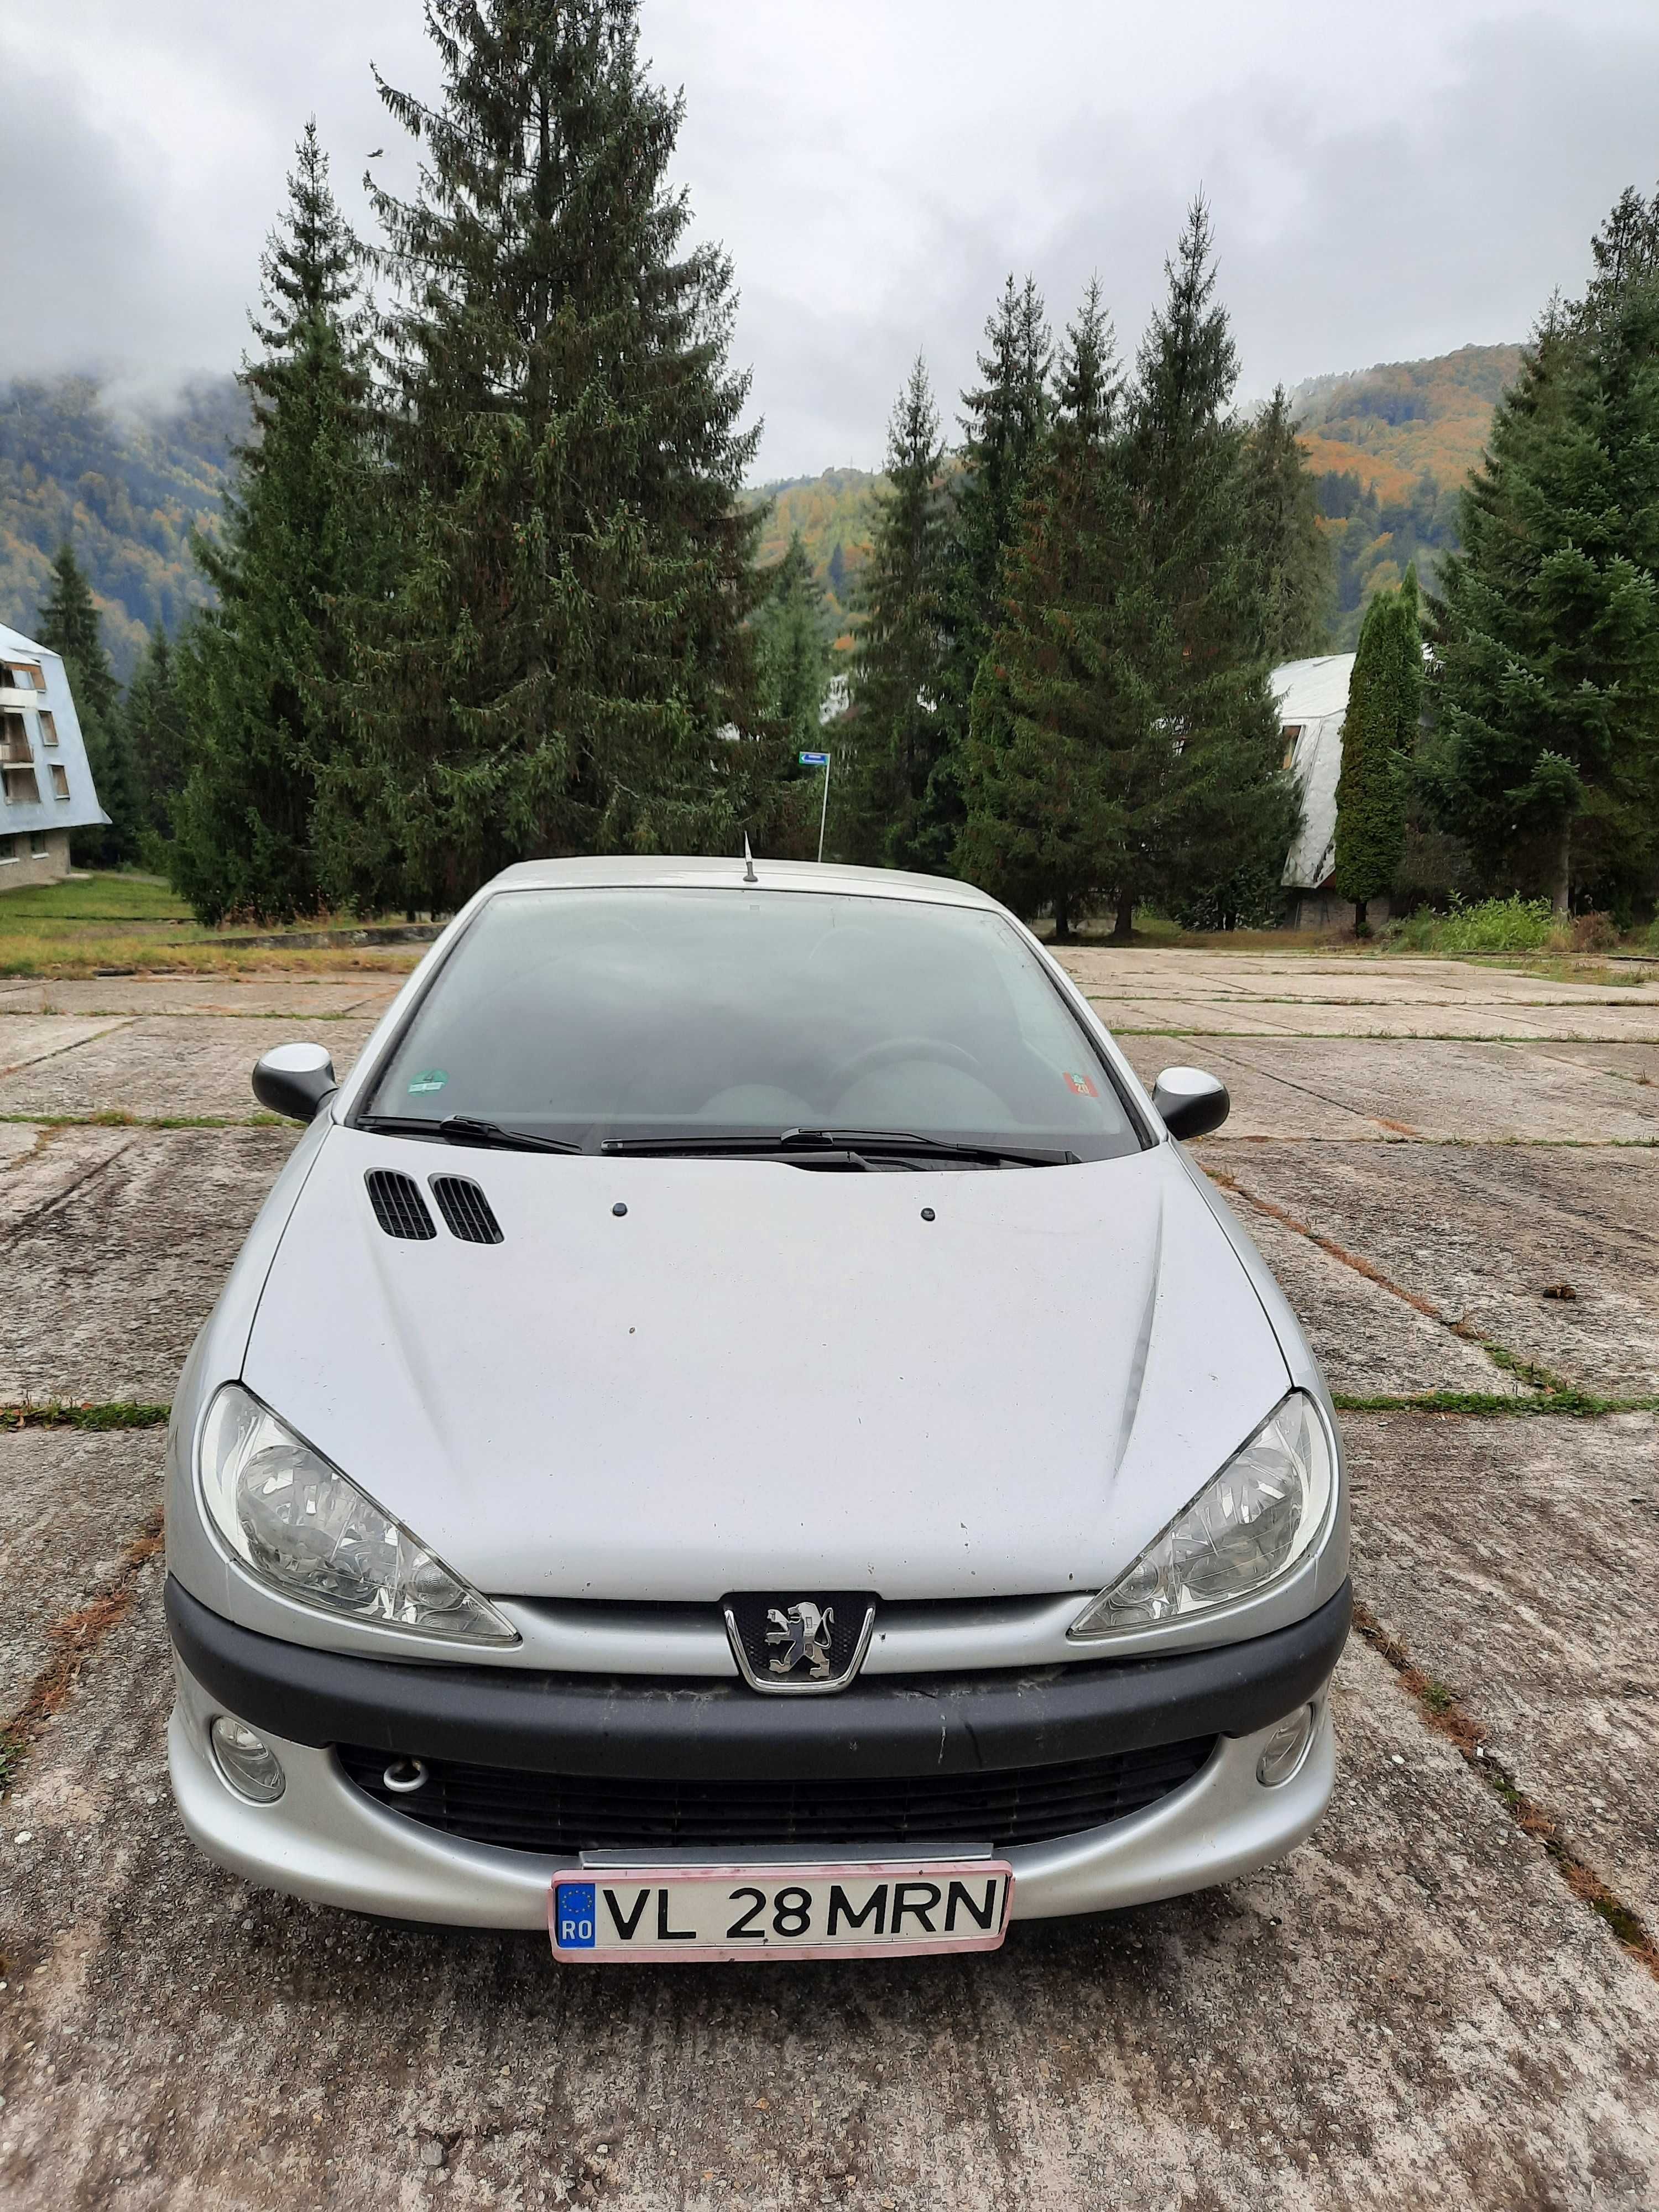 Macheta Peugeot 206 tuning 1:18 Ramnicu Valcea • OLX.ro